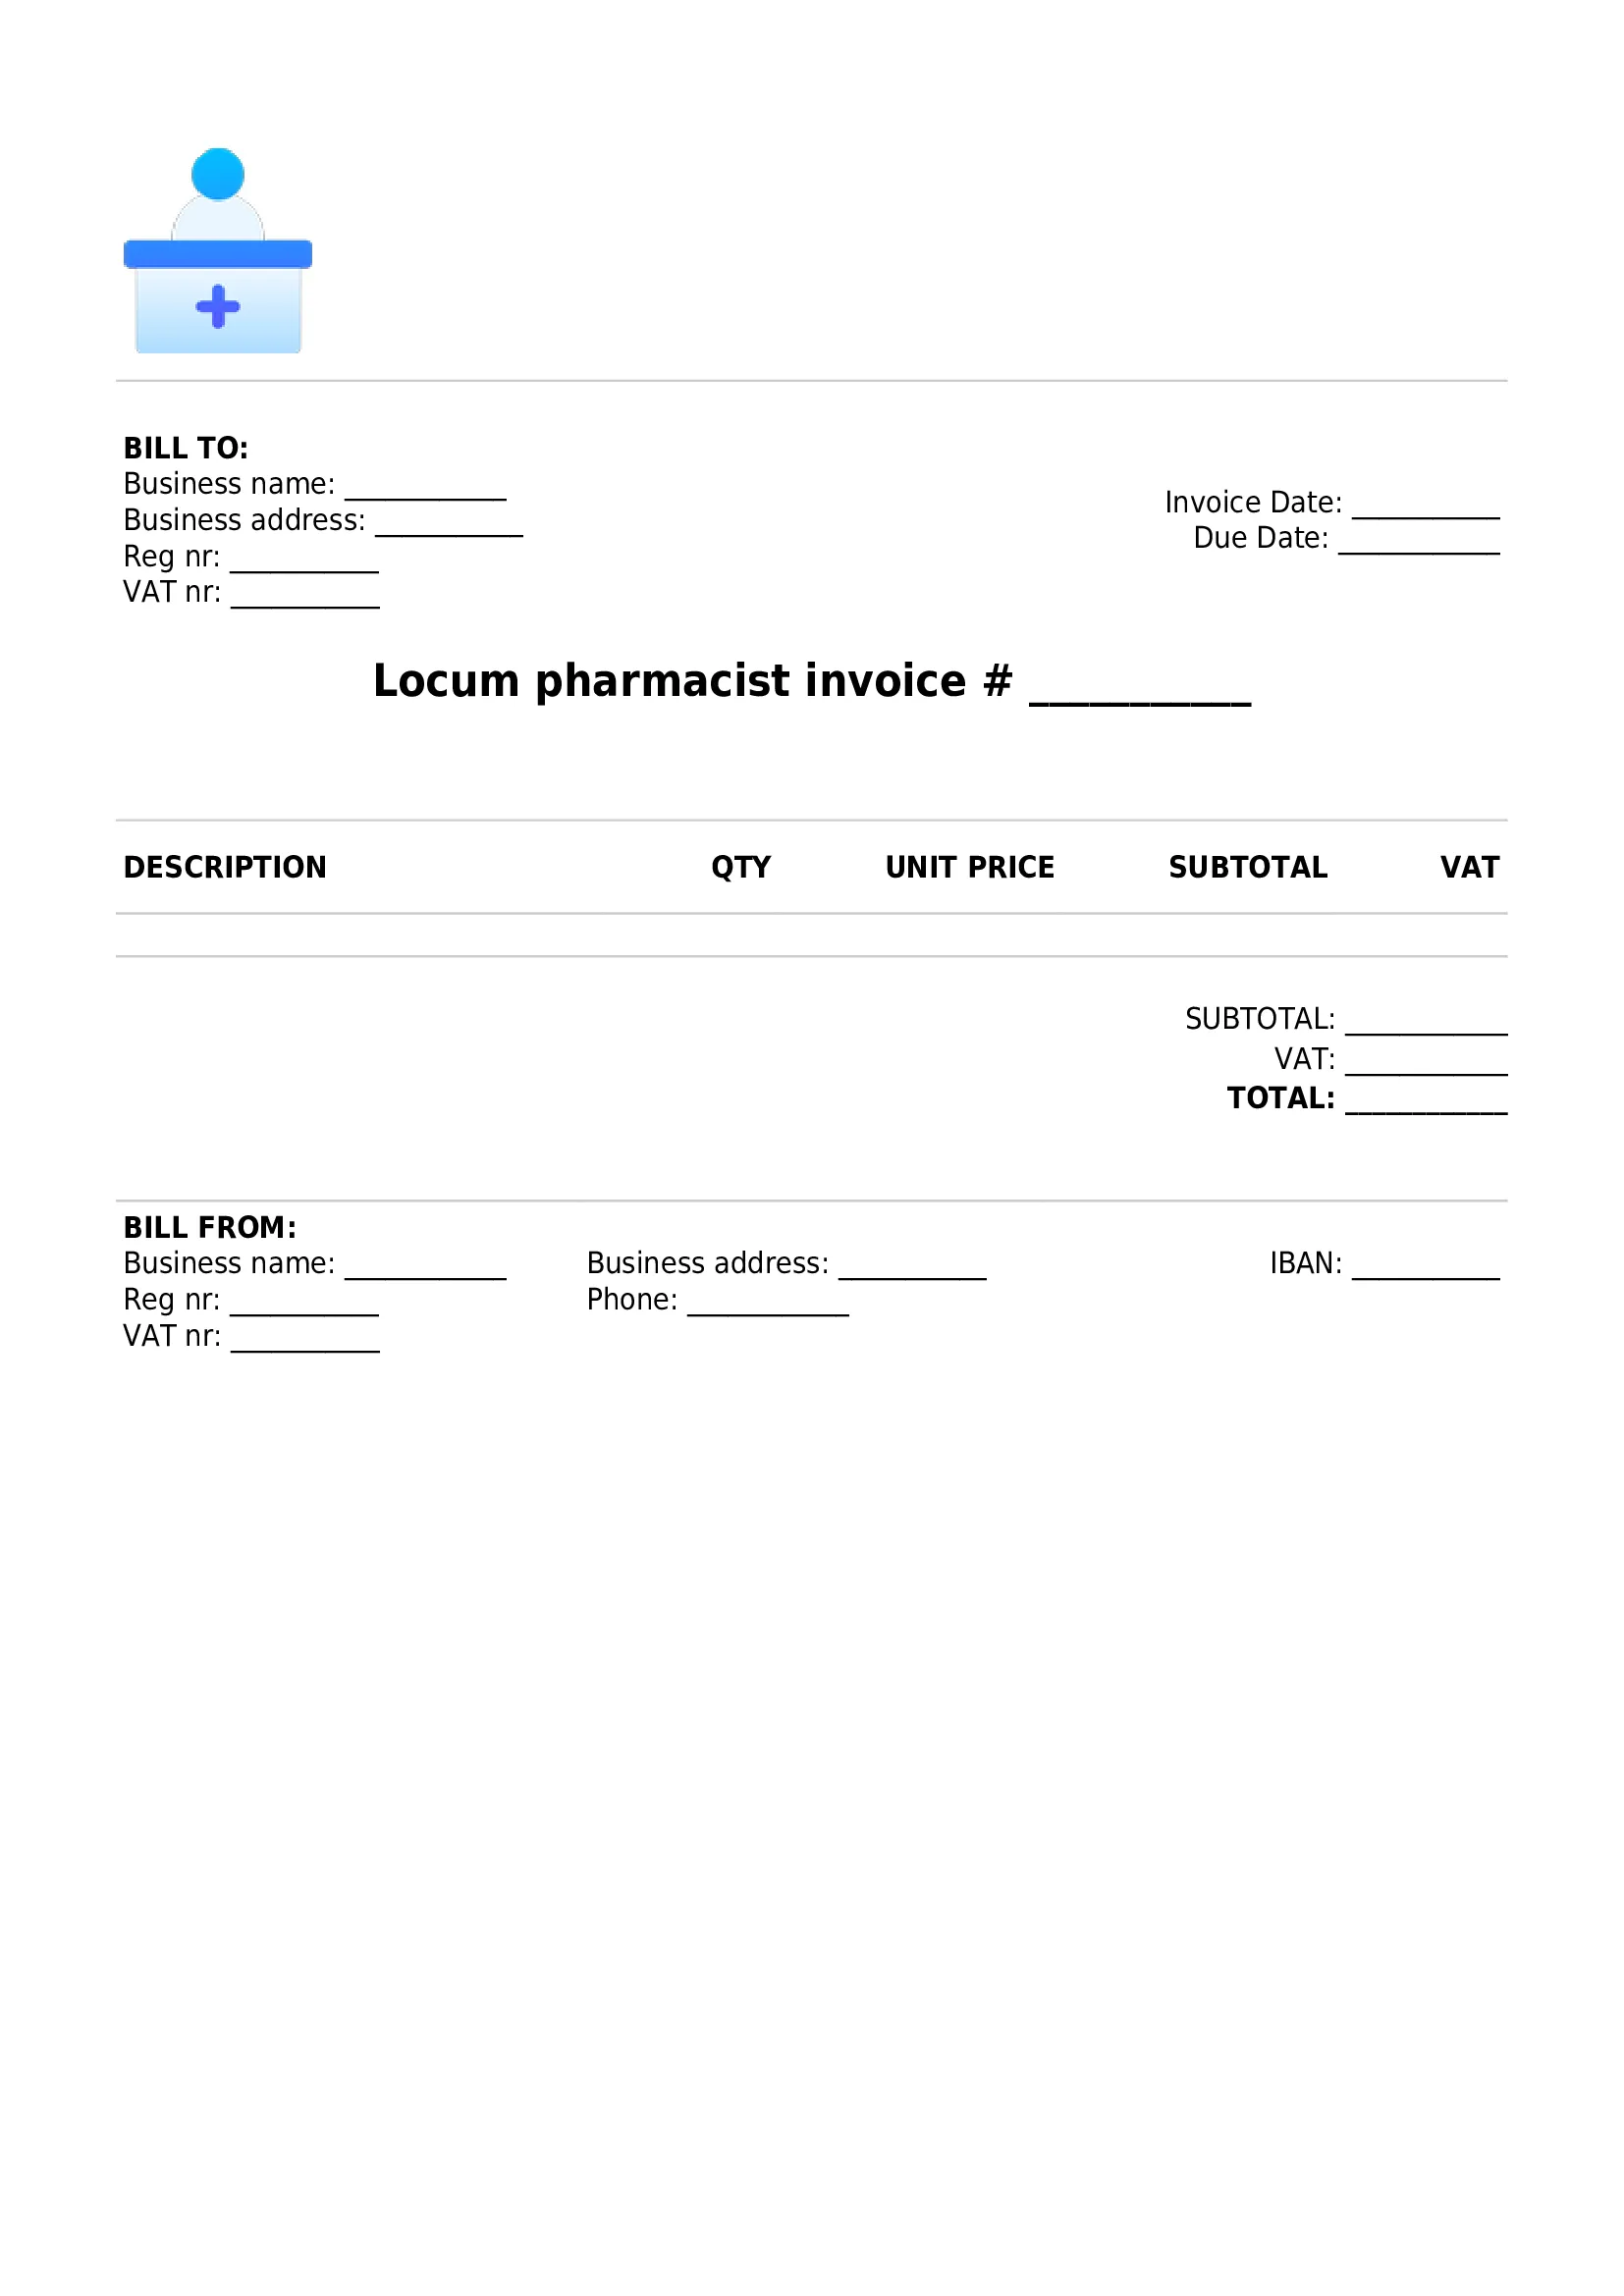 35 Free Locum Pharmacist Invoice Templates UK - Word, Excel, PDF ...